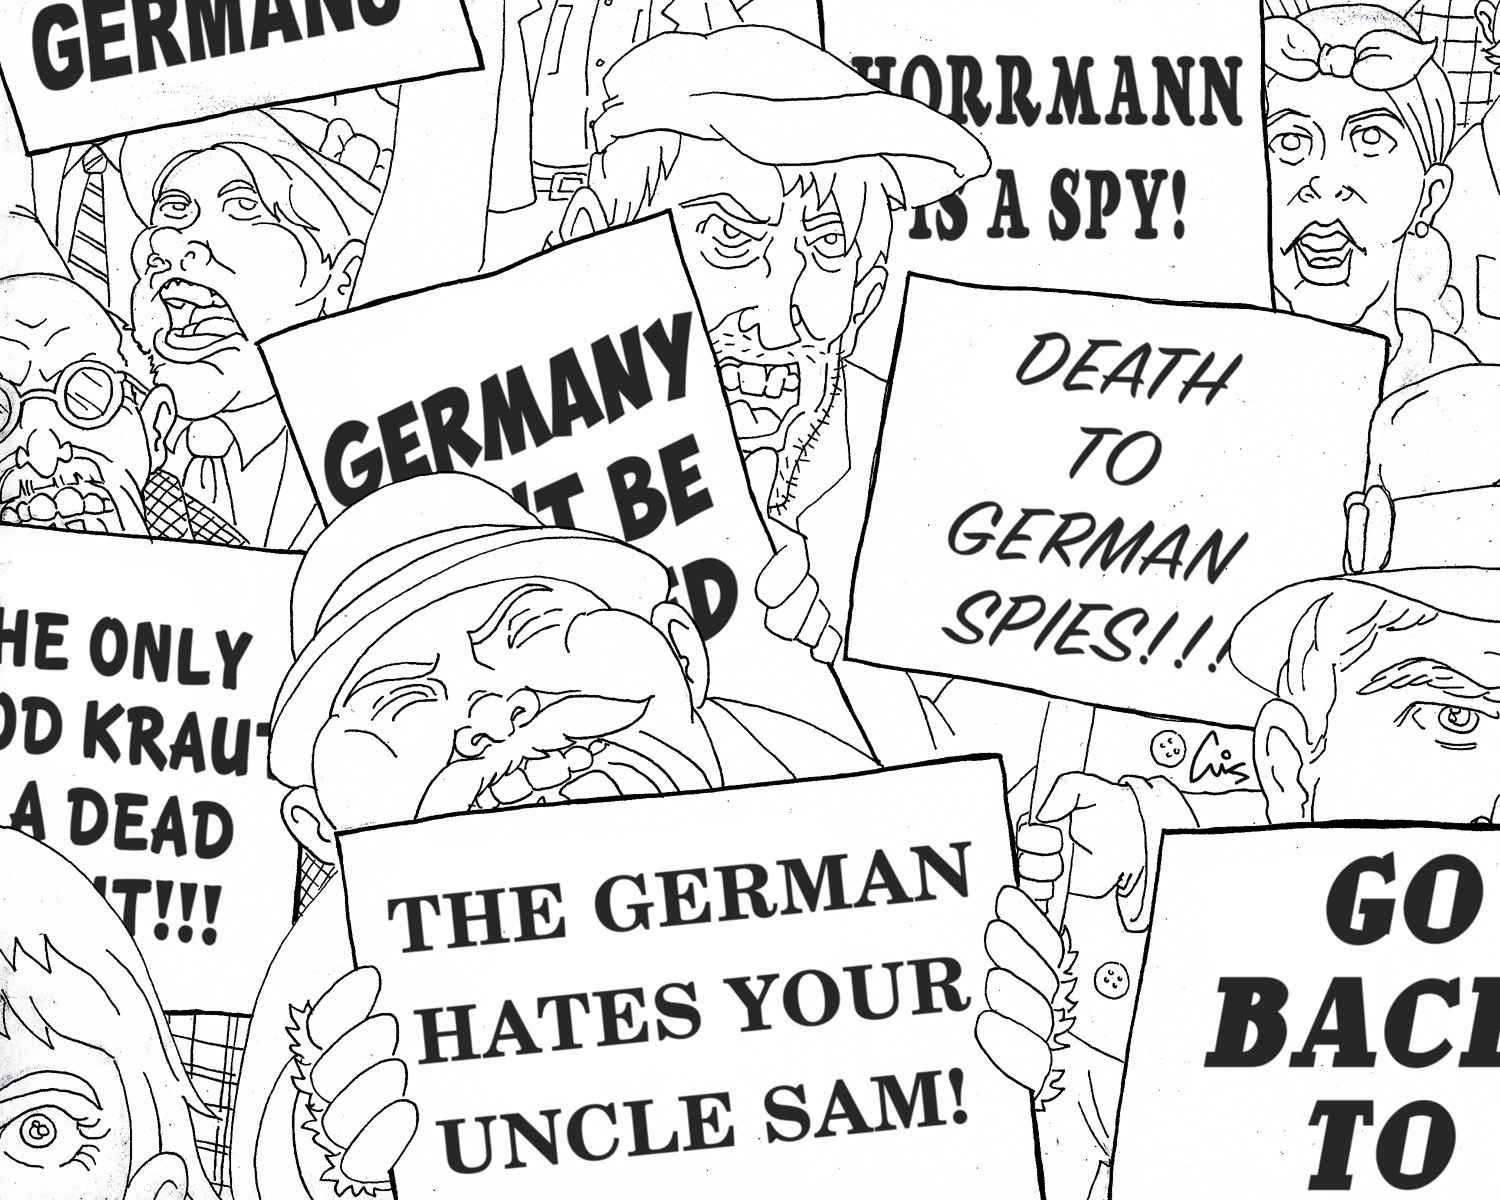 Death to German Spies